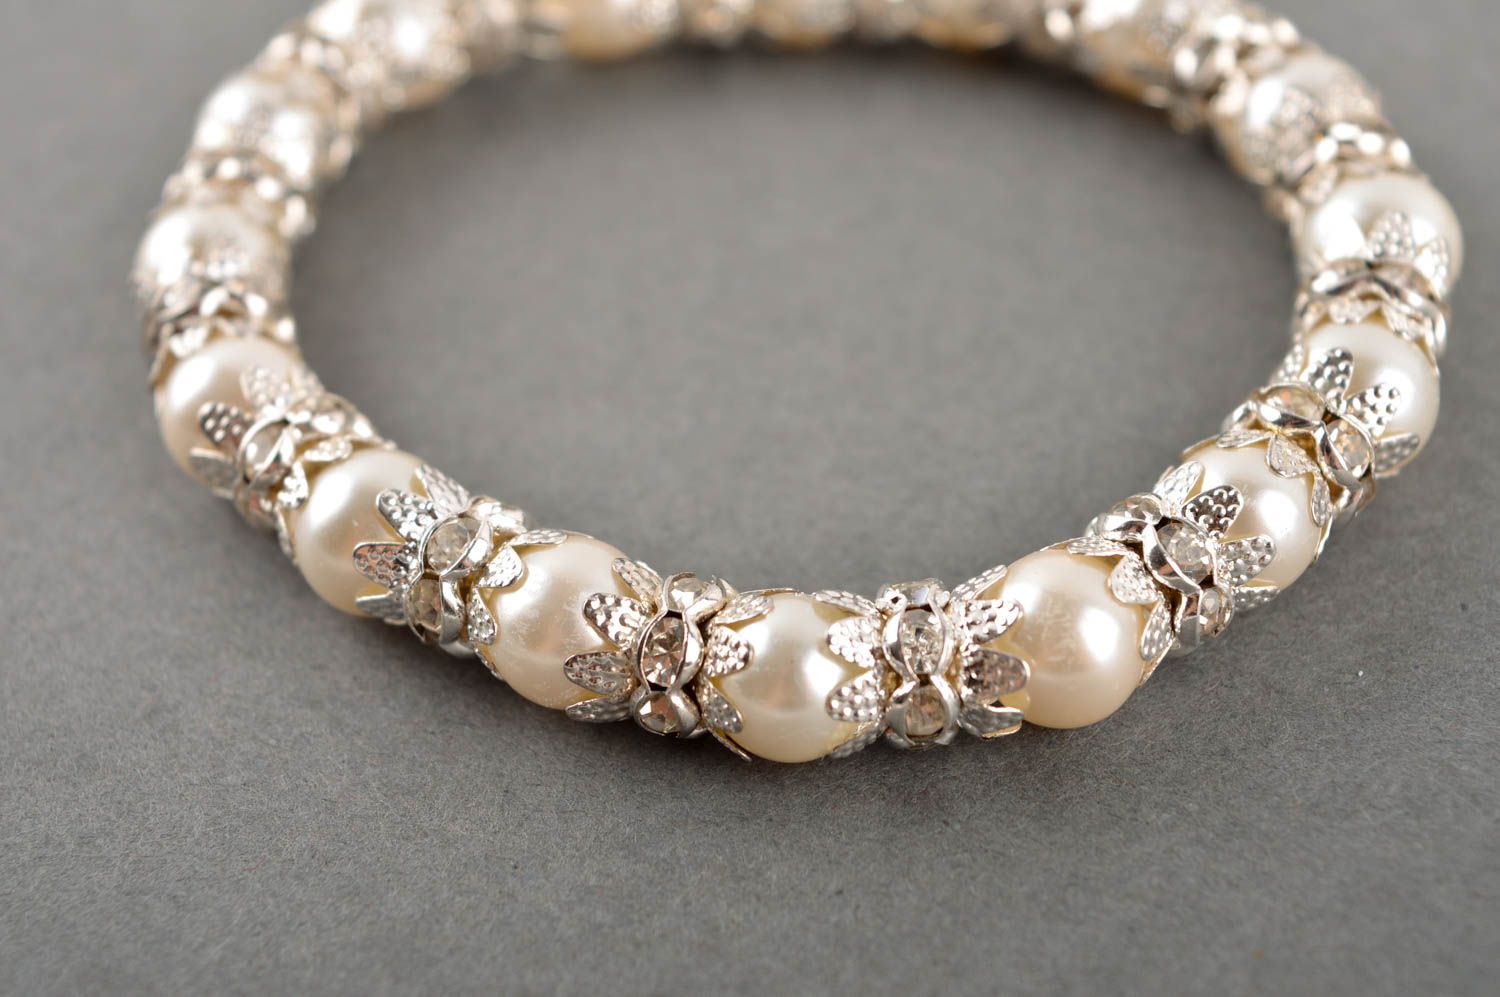 Pearl bracelet handmade jewelry wrist bracelet designer accessories gift for her photo 3